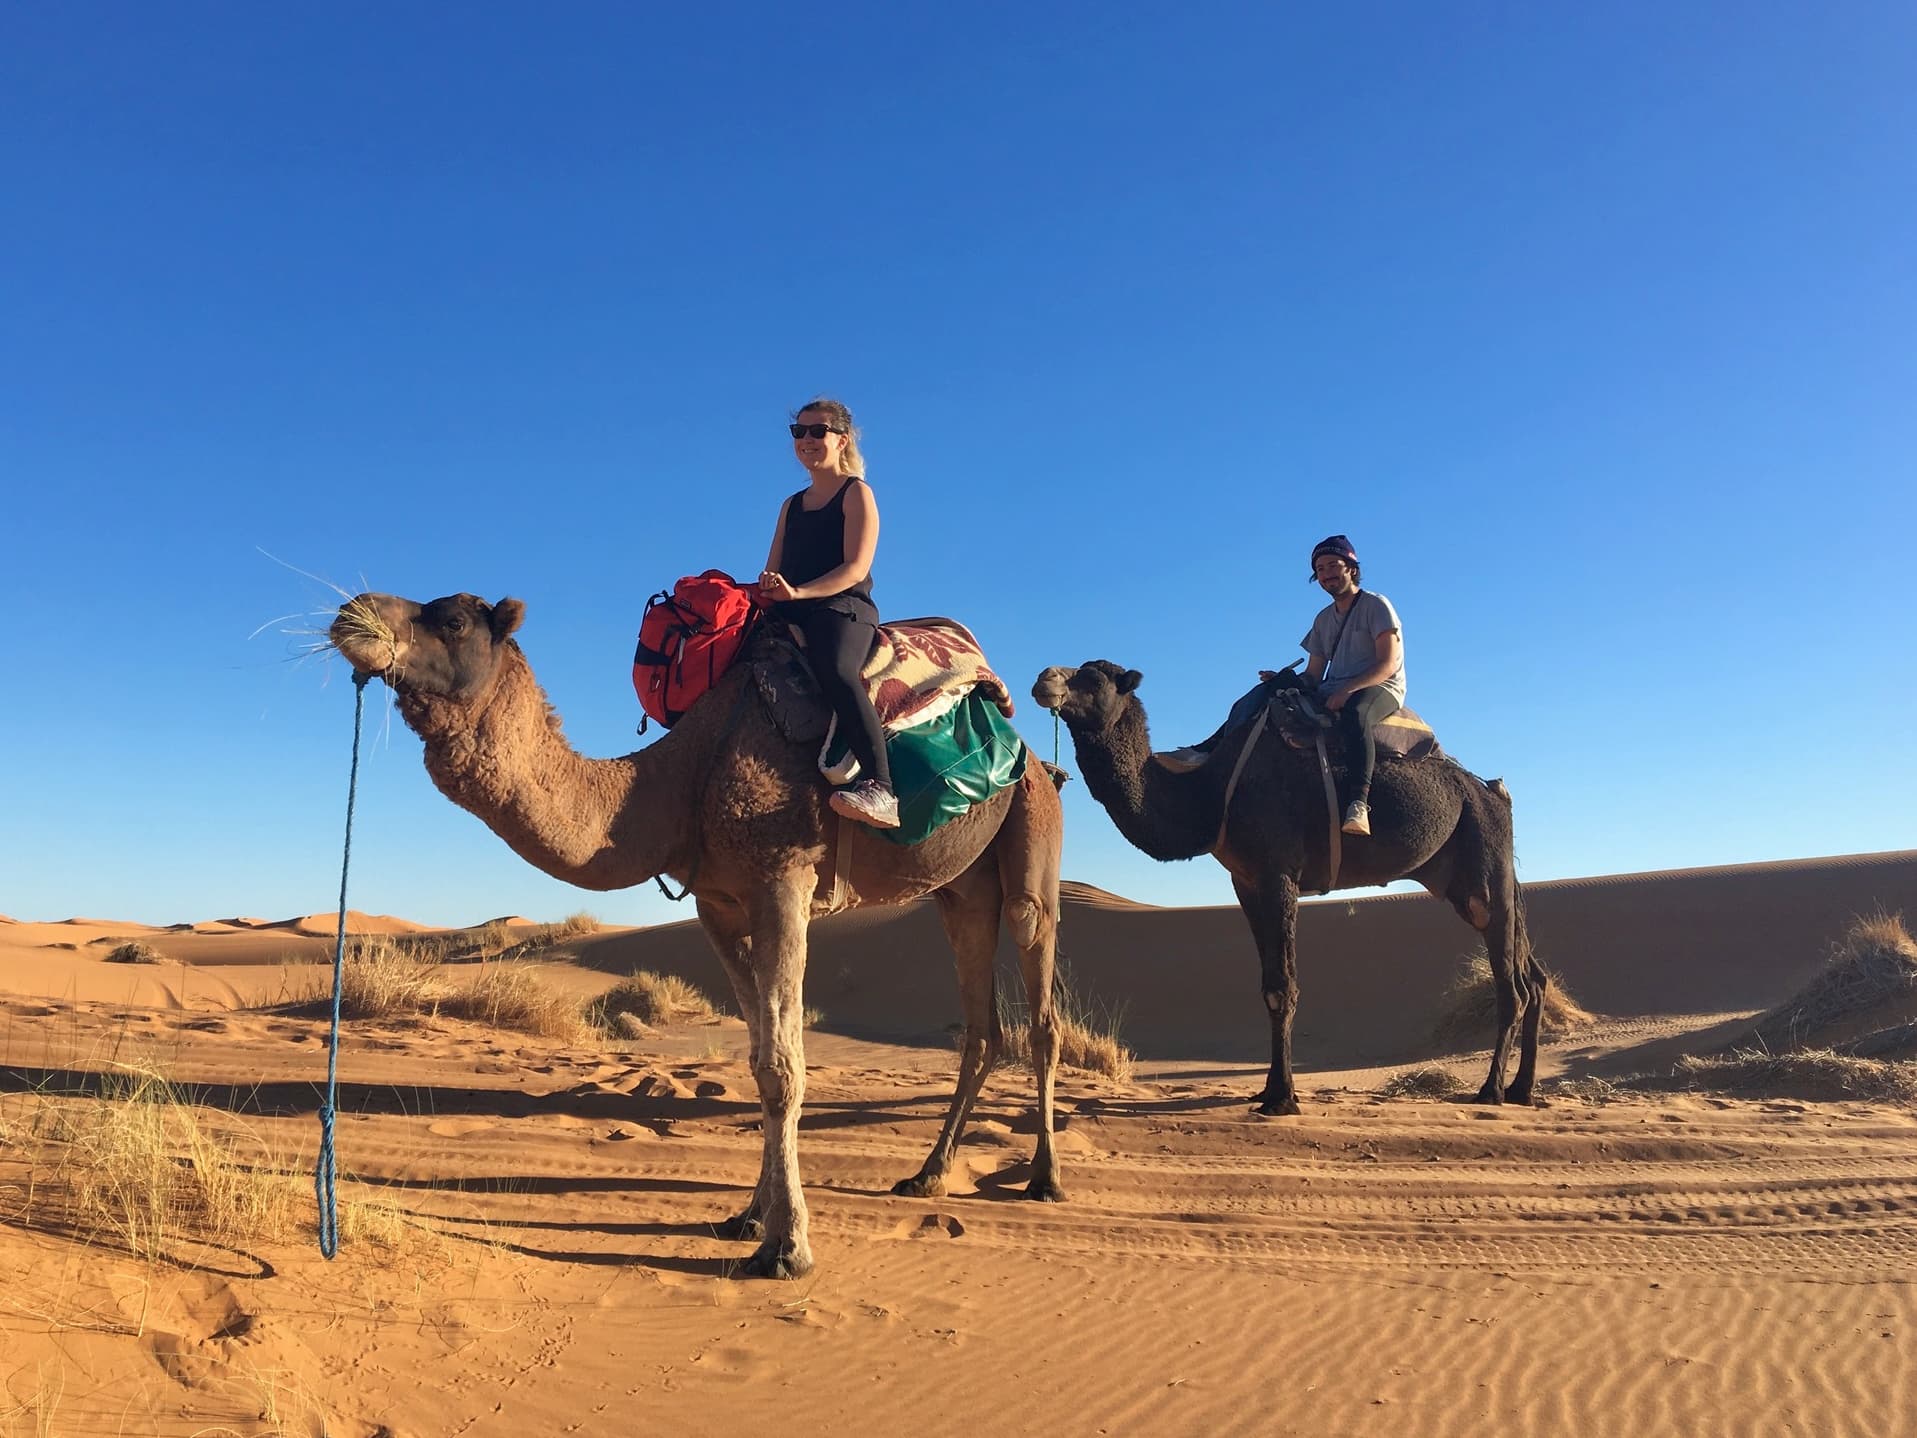 Aydin & Caroline sitting on their camels in the desert